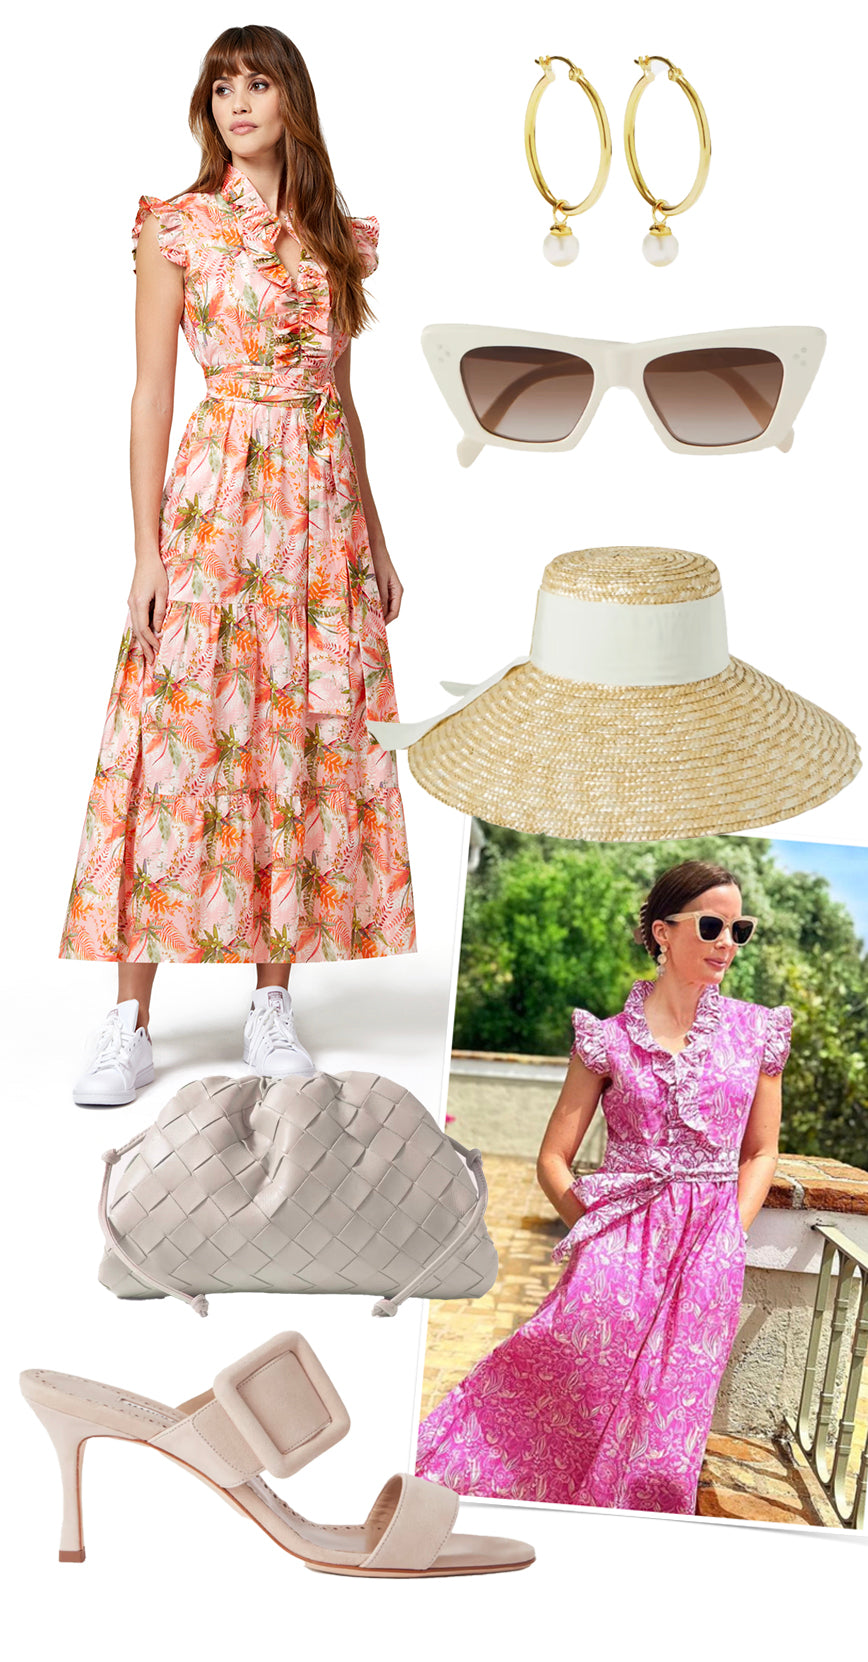 ridleylondon-chic-veratile-printed-floral-silk-manon-summer-dress